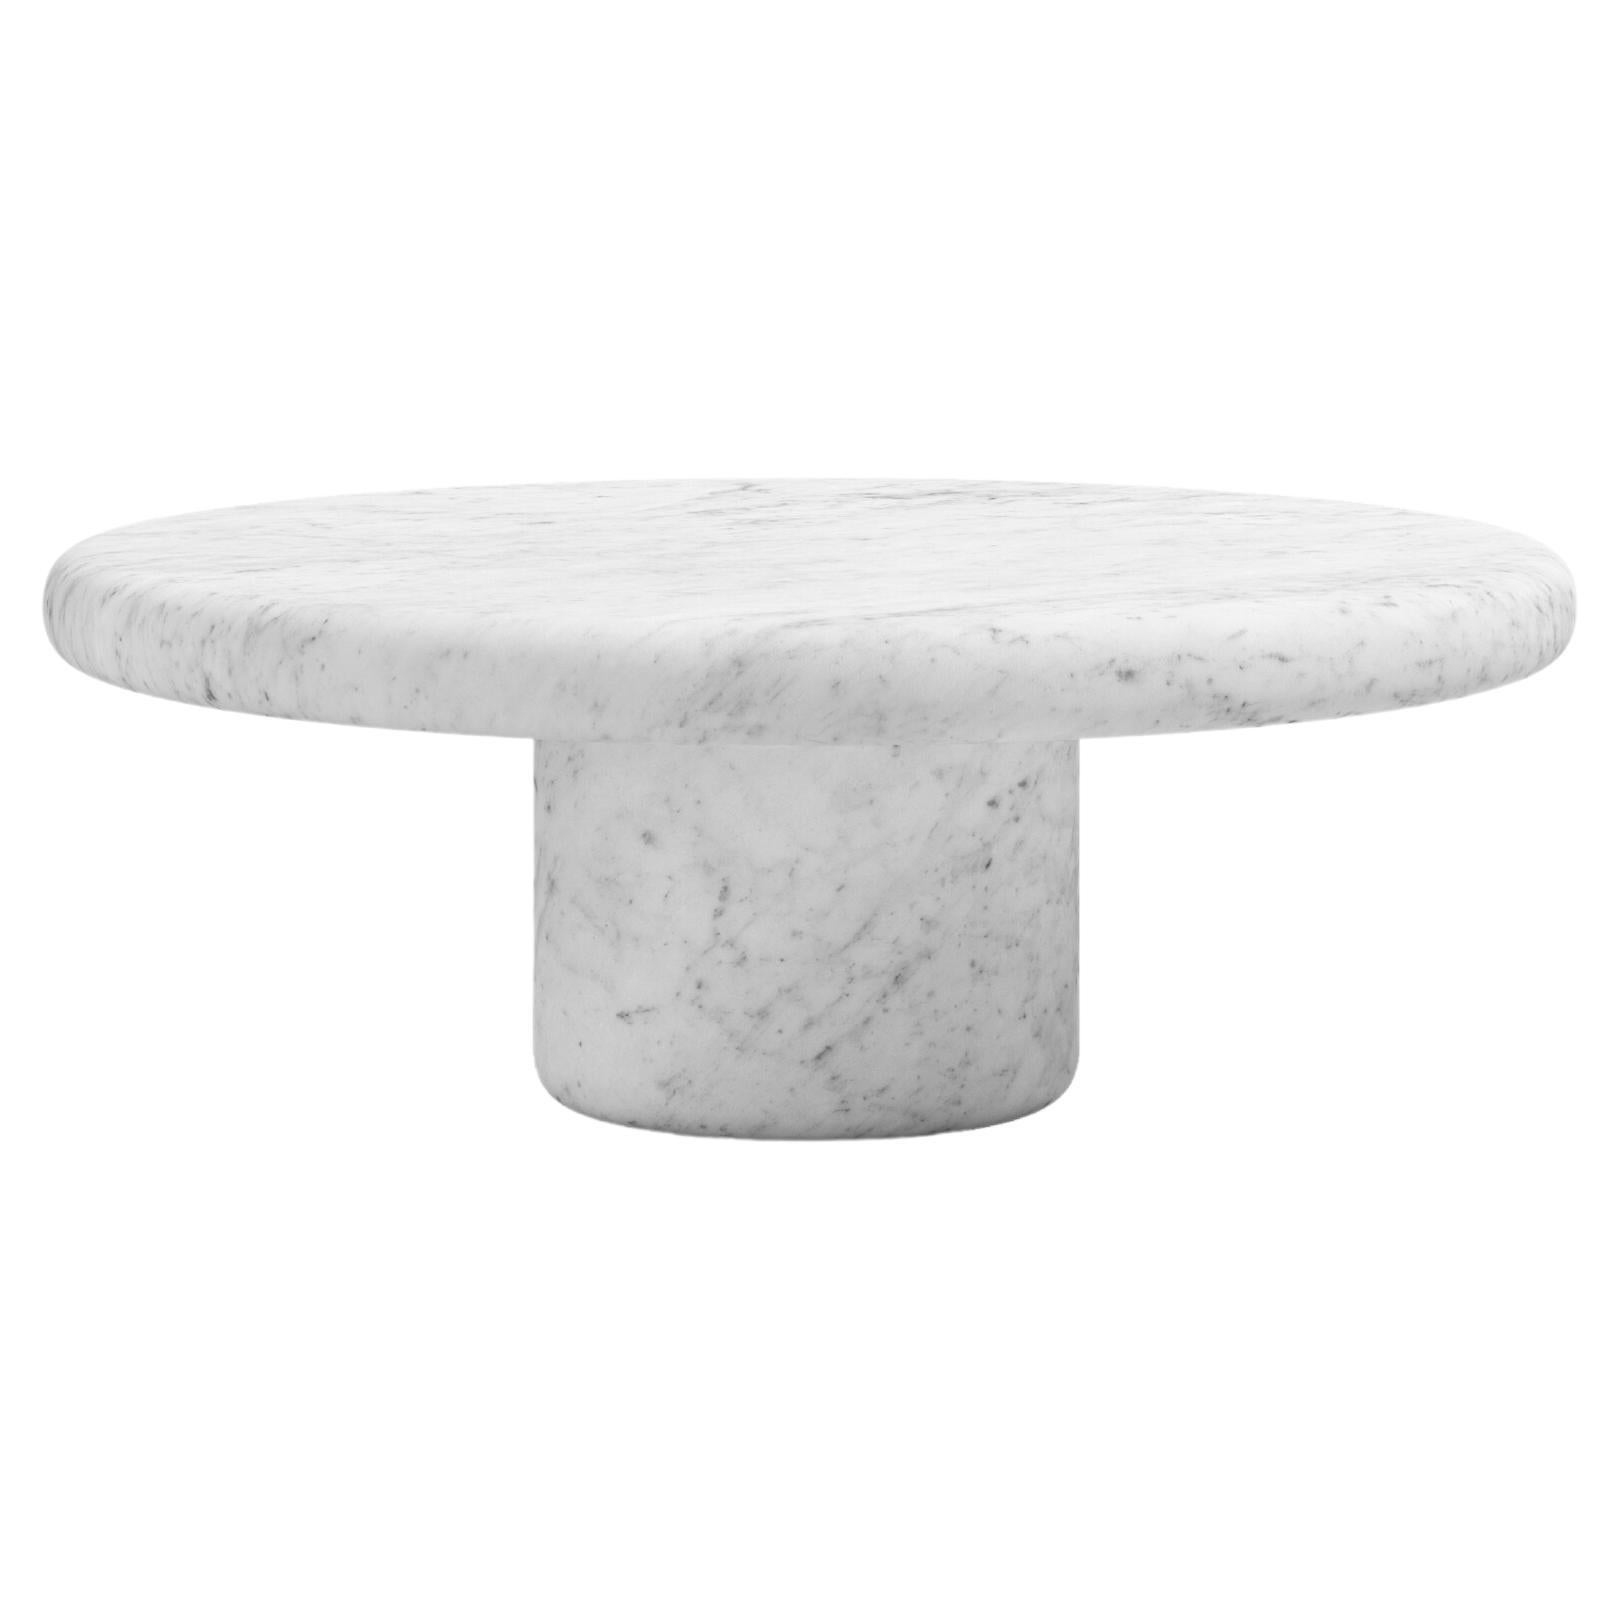 FORM(LA) Luna Round Coffee Table 42”L x 42”W x 15”H Carrara Bianco Marble